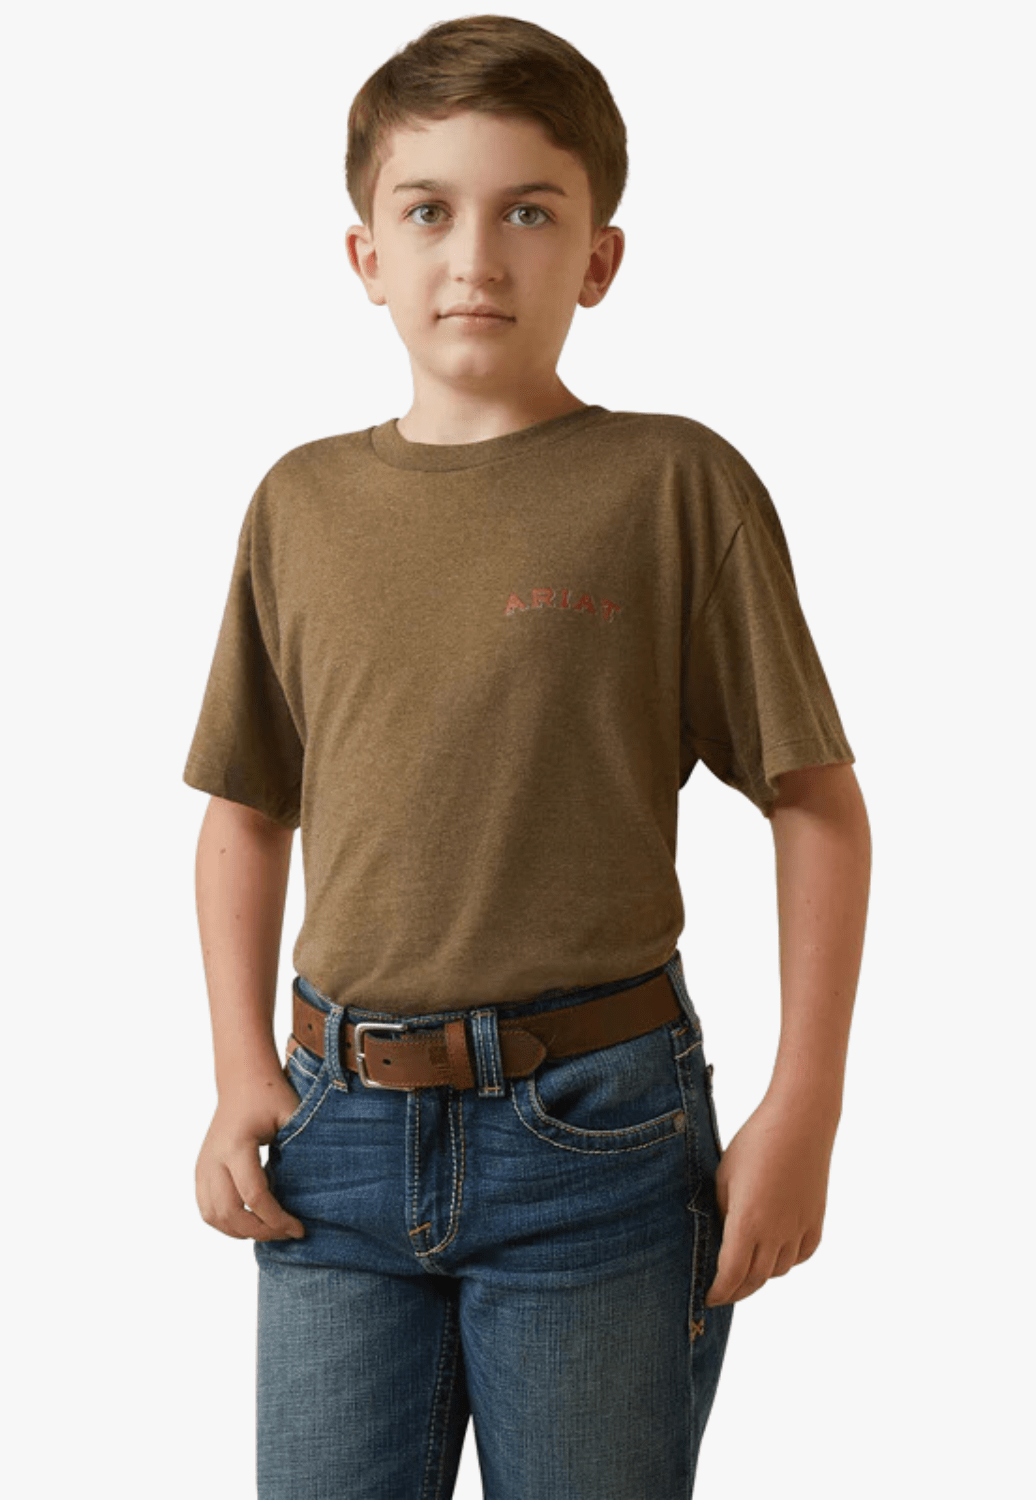 Ariat CLOTHING-Boys T-Shirts Ariat Boys Farm Truck T-shirt